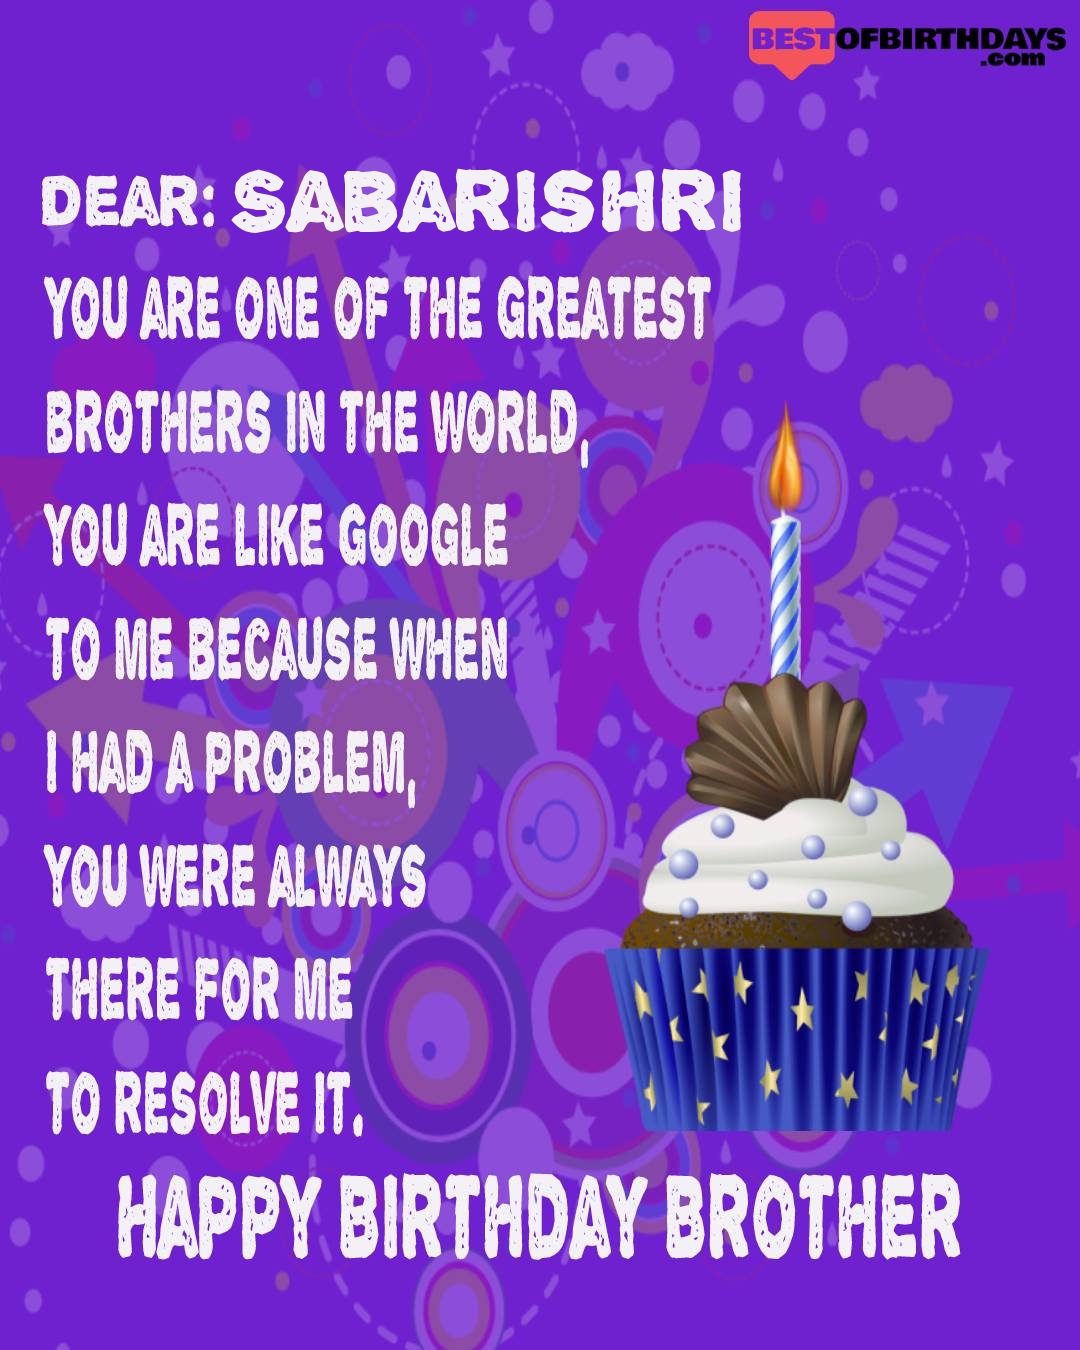 Happy birthday sabarishri bhai brother bro